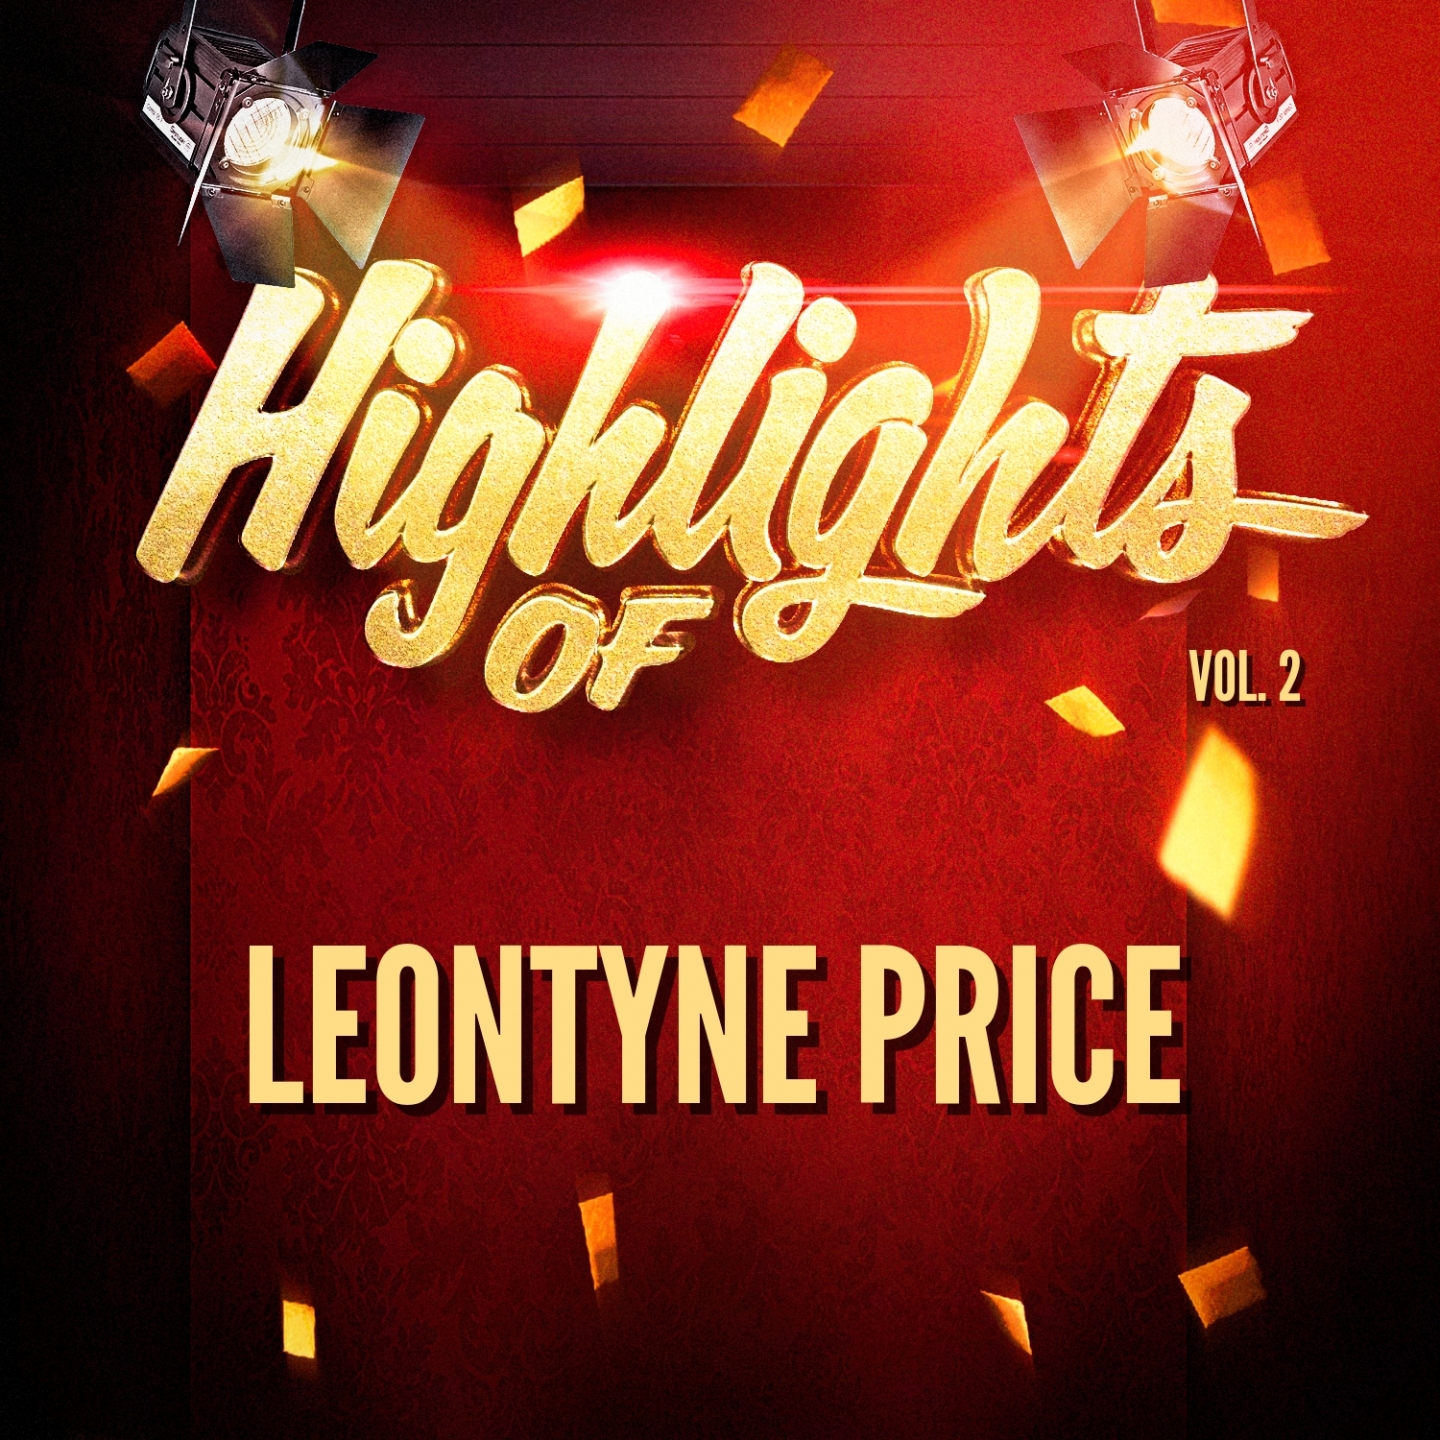 Highlights of Leontyne Price, Vol. 2